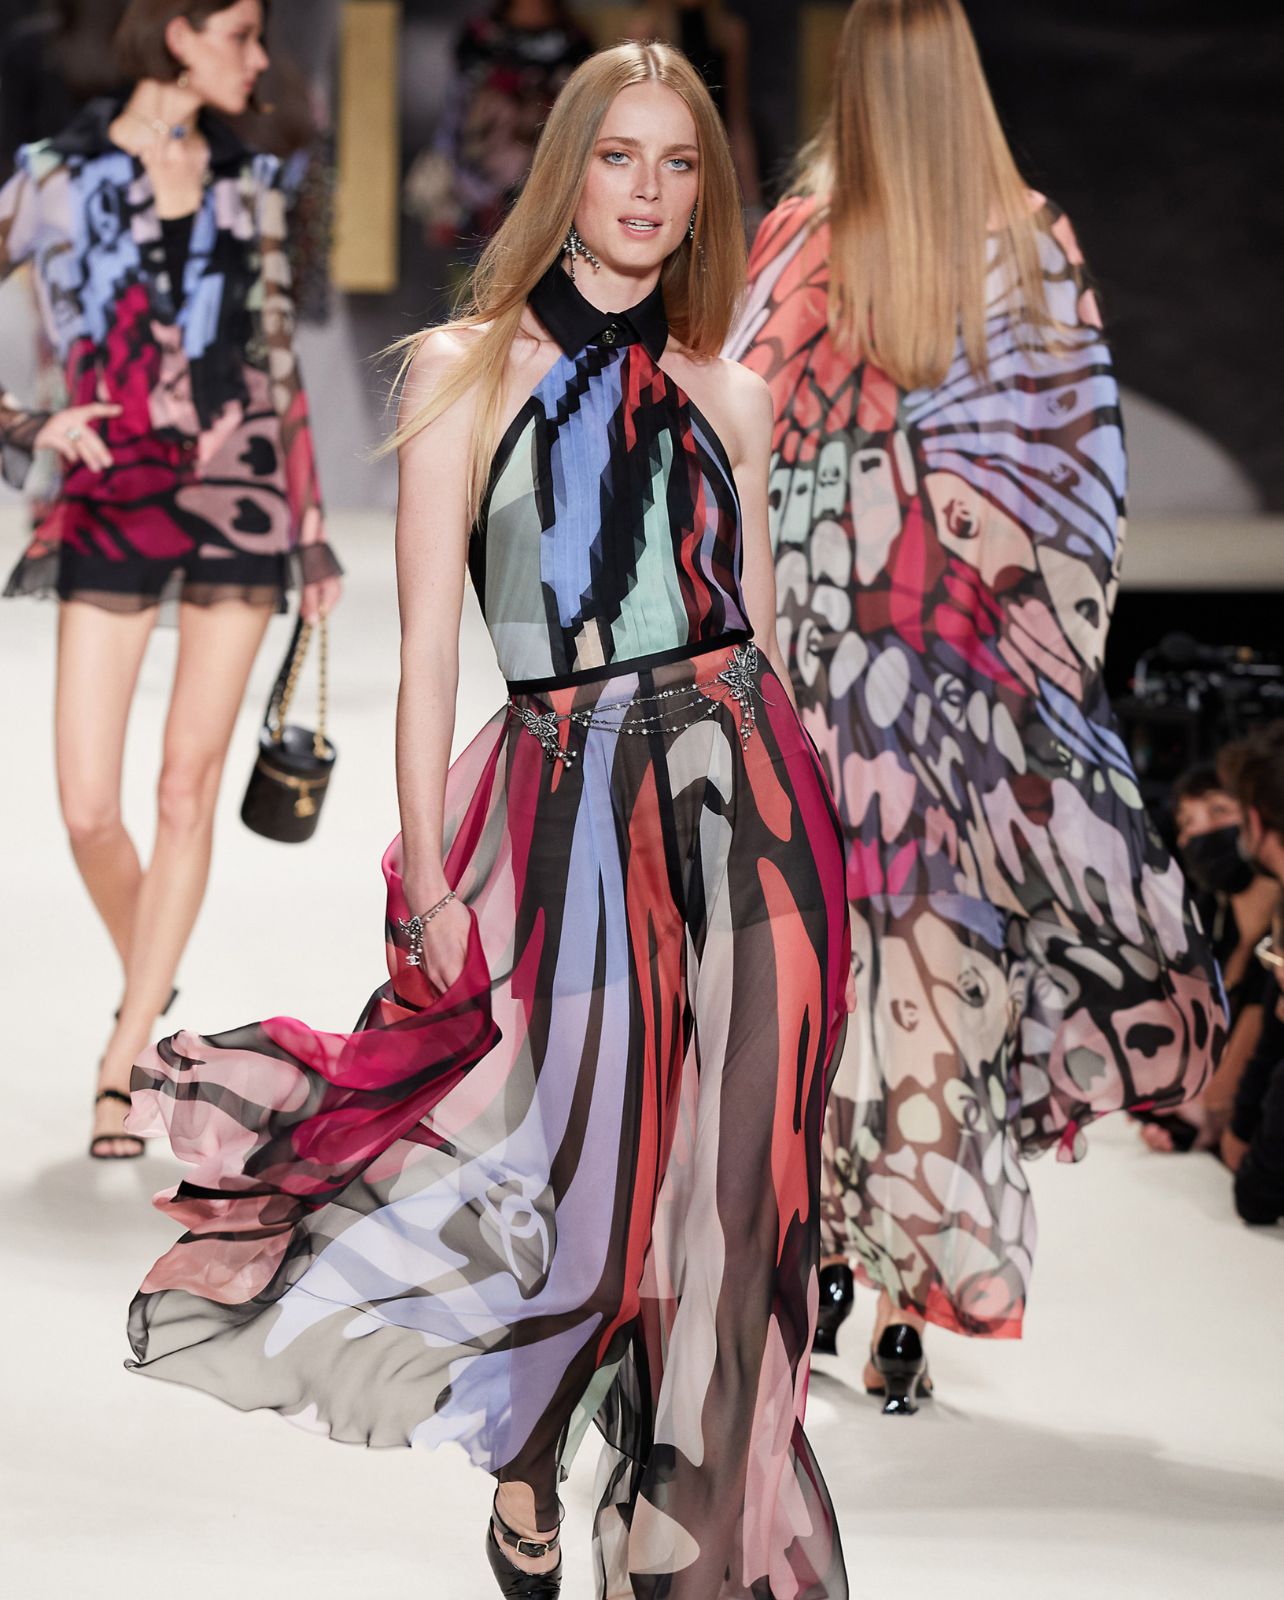 Chanel model walks runway in a multicolored halter dress